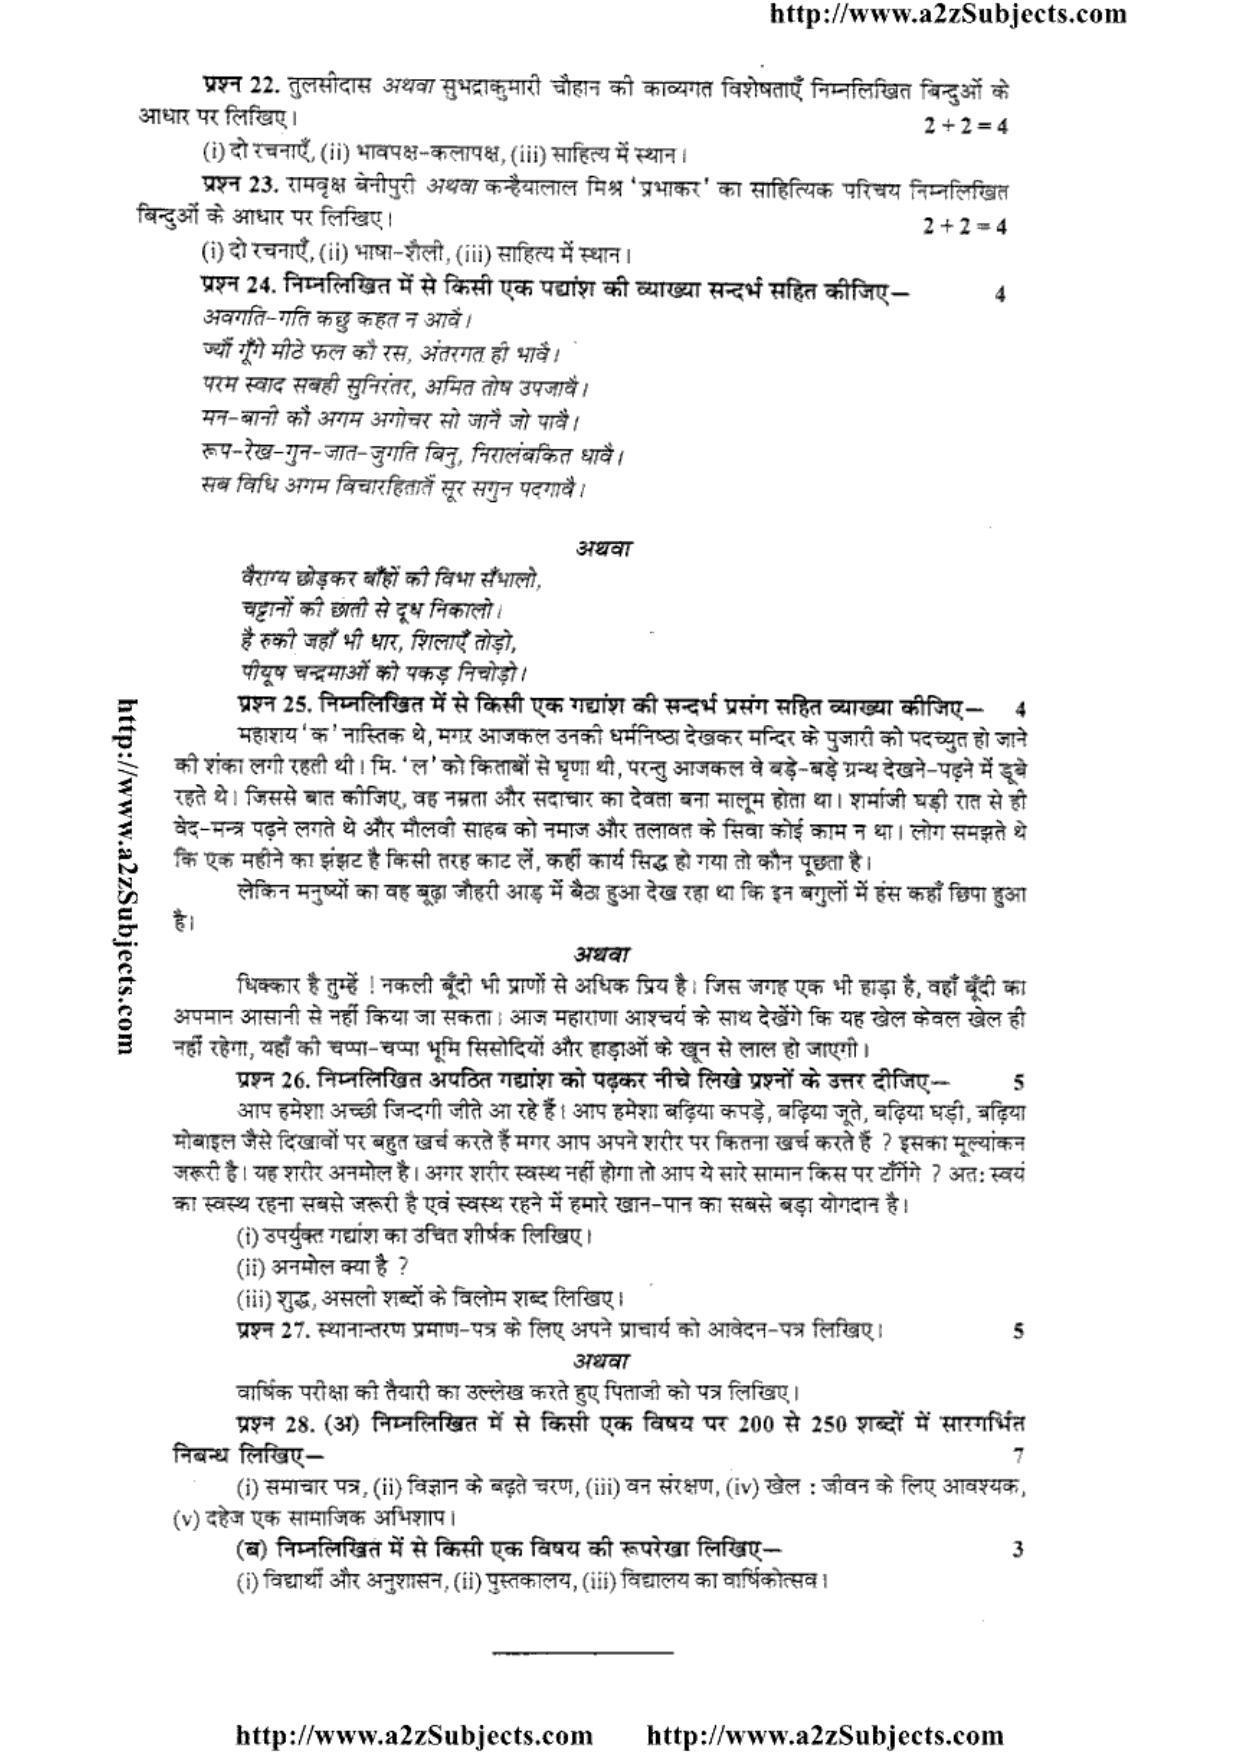 MP Board Class 10 Hindi (Hindi Medium) 2016 Question Paper - Page 3